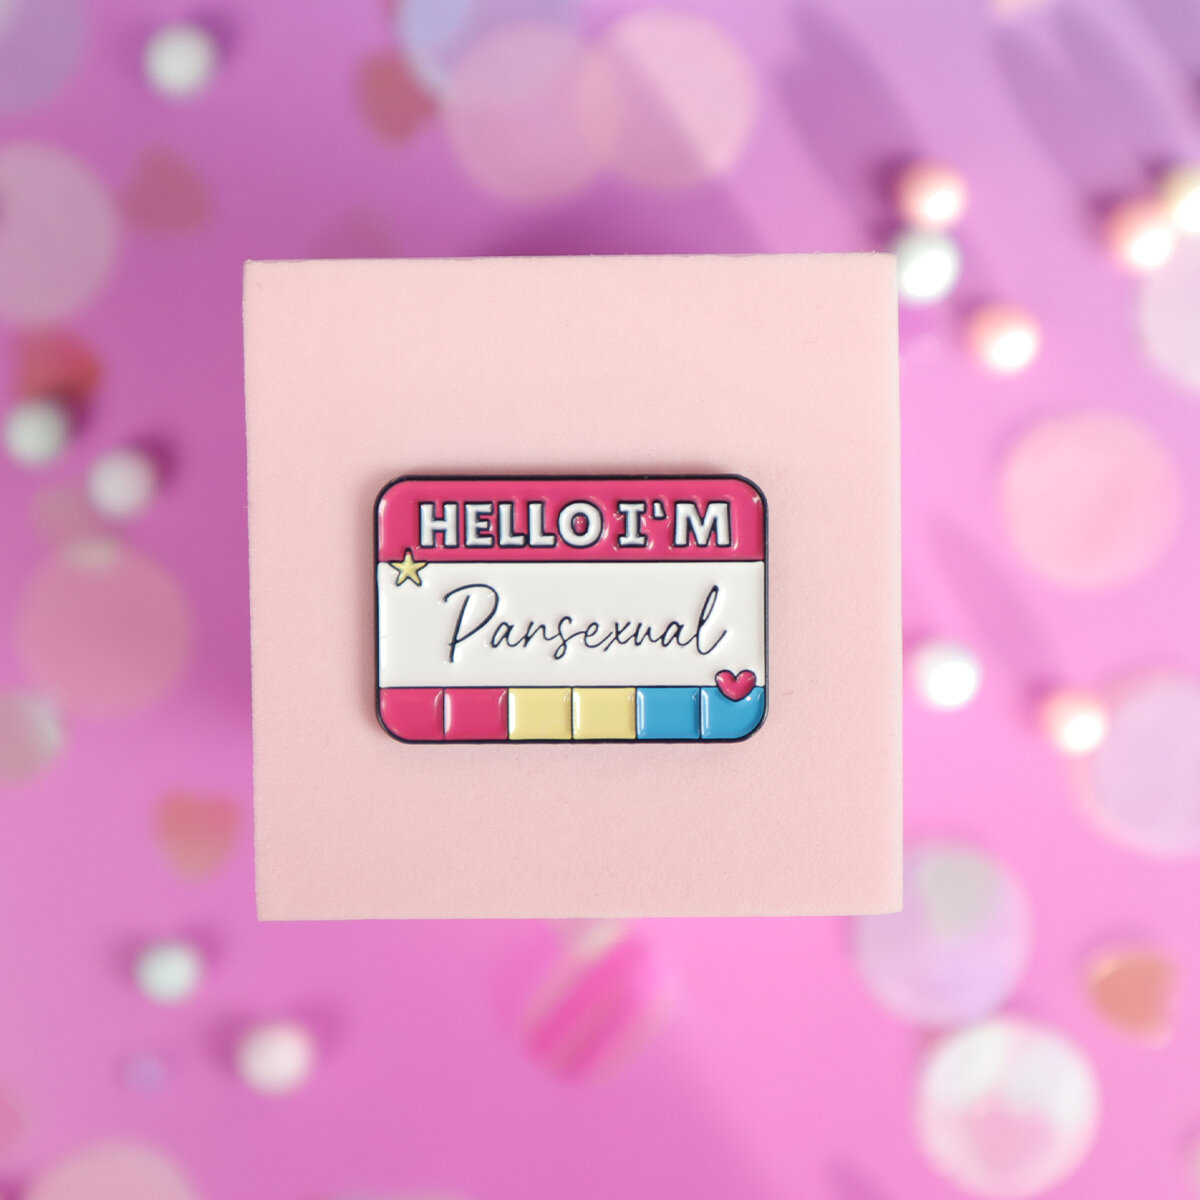 Pin - Hello Im pansexual